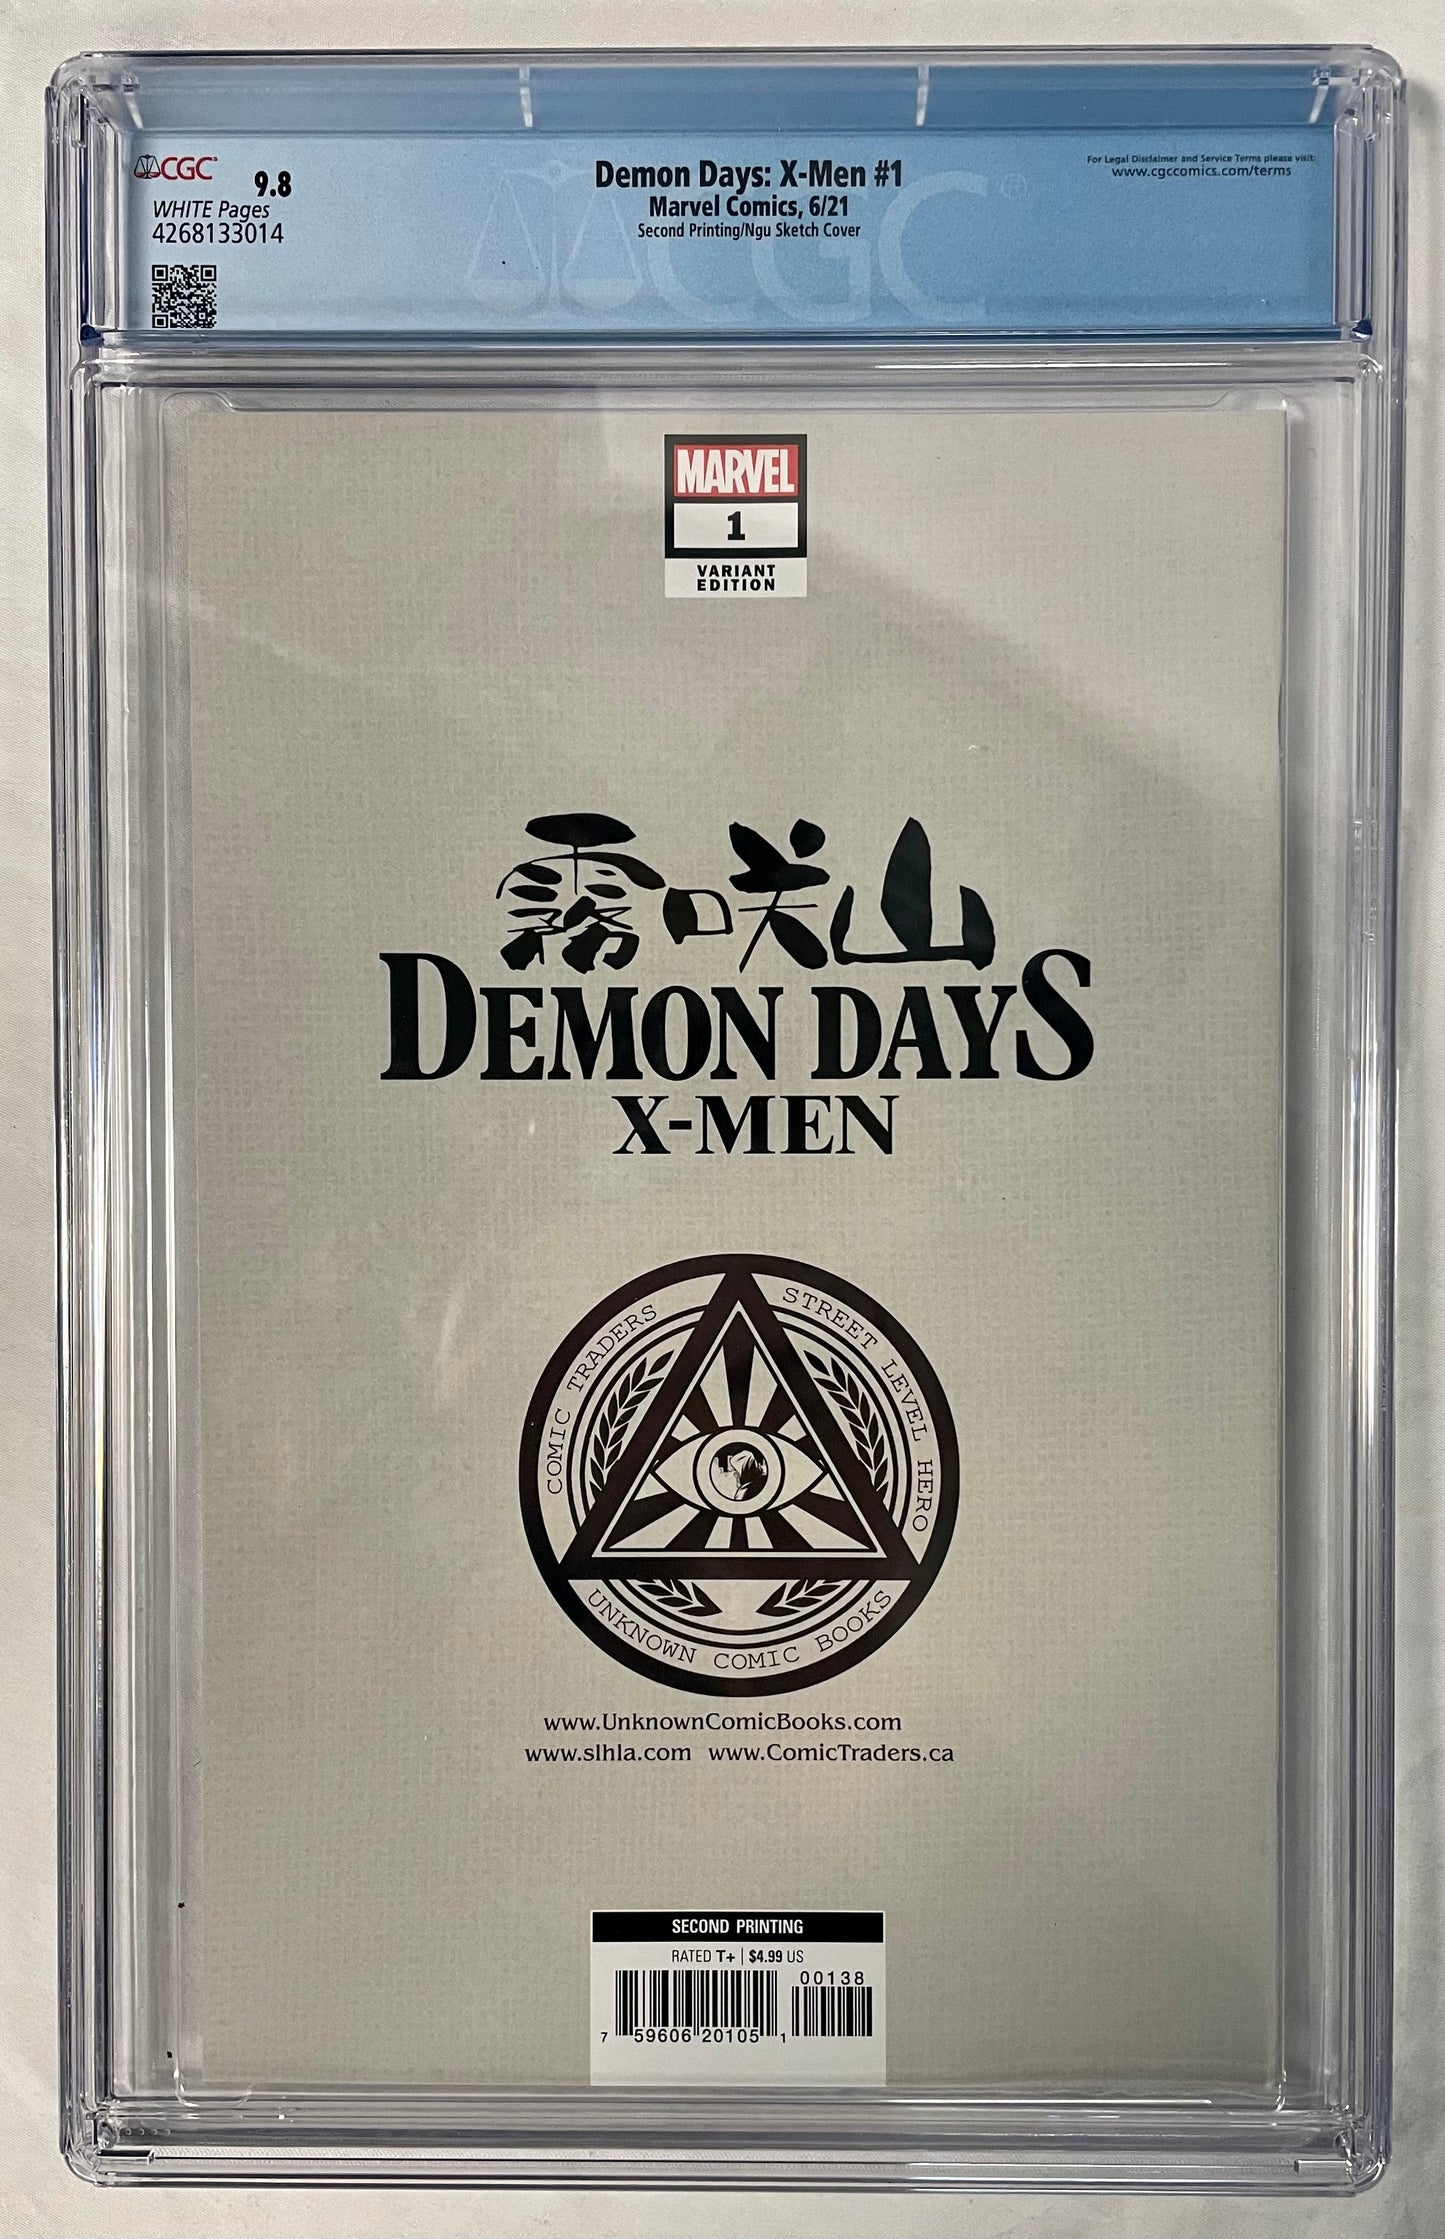 Marvel Comics Demon Days: X-Men #1 CGC 9.8 CVR C 2nd Print